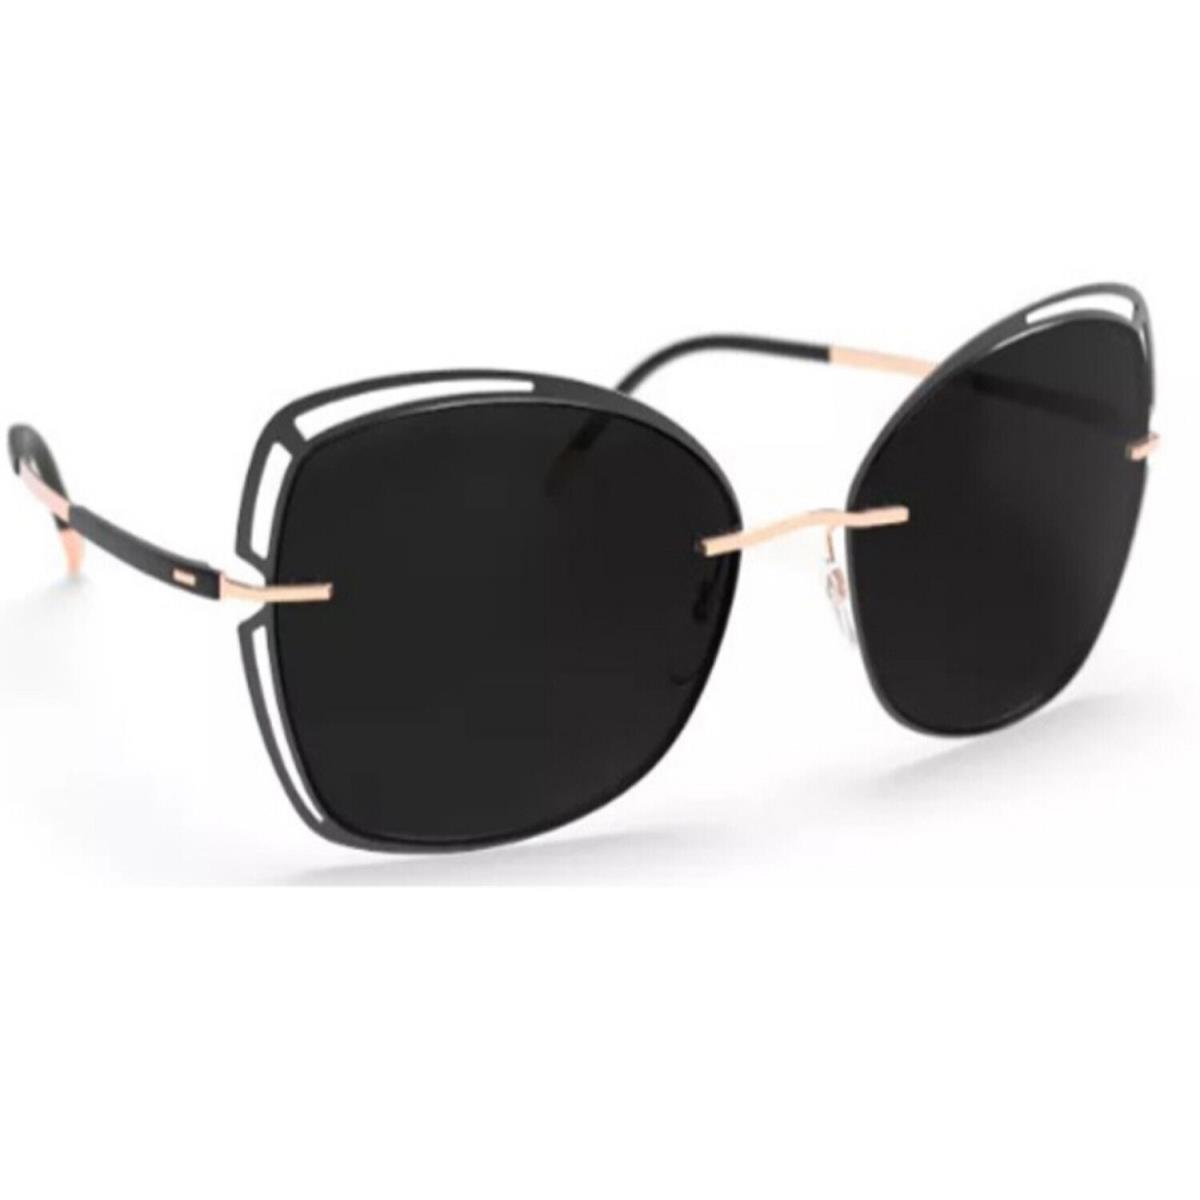 Silhouette Sunglasses Accent Shades 58/17/135 Black Gold Polarized 8177/75-9030